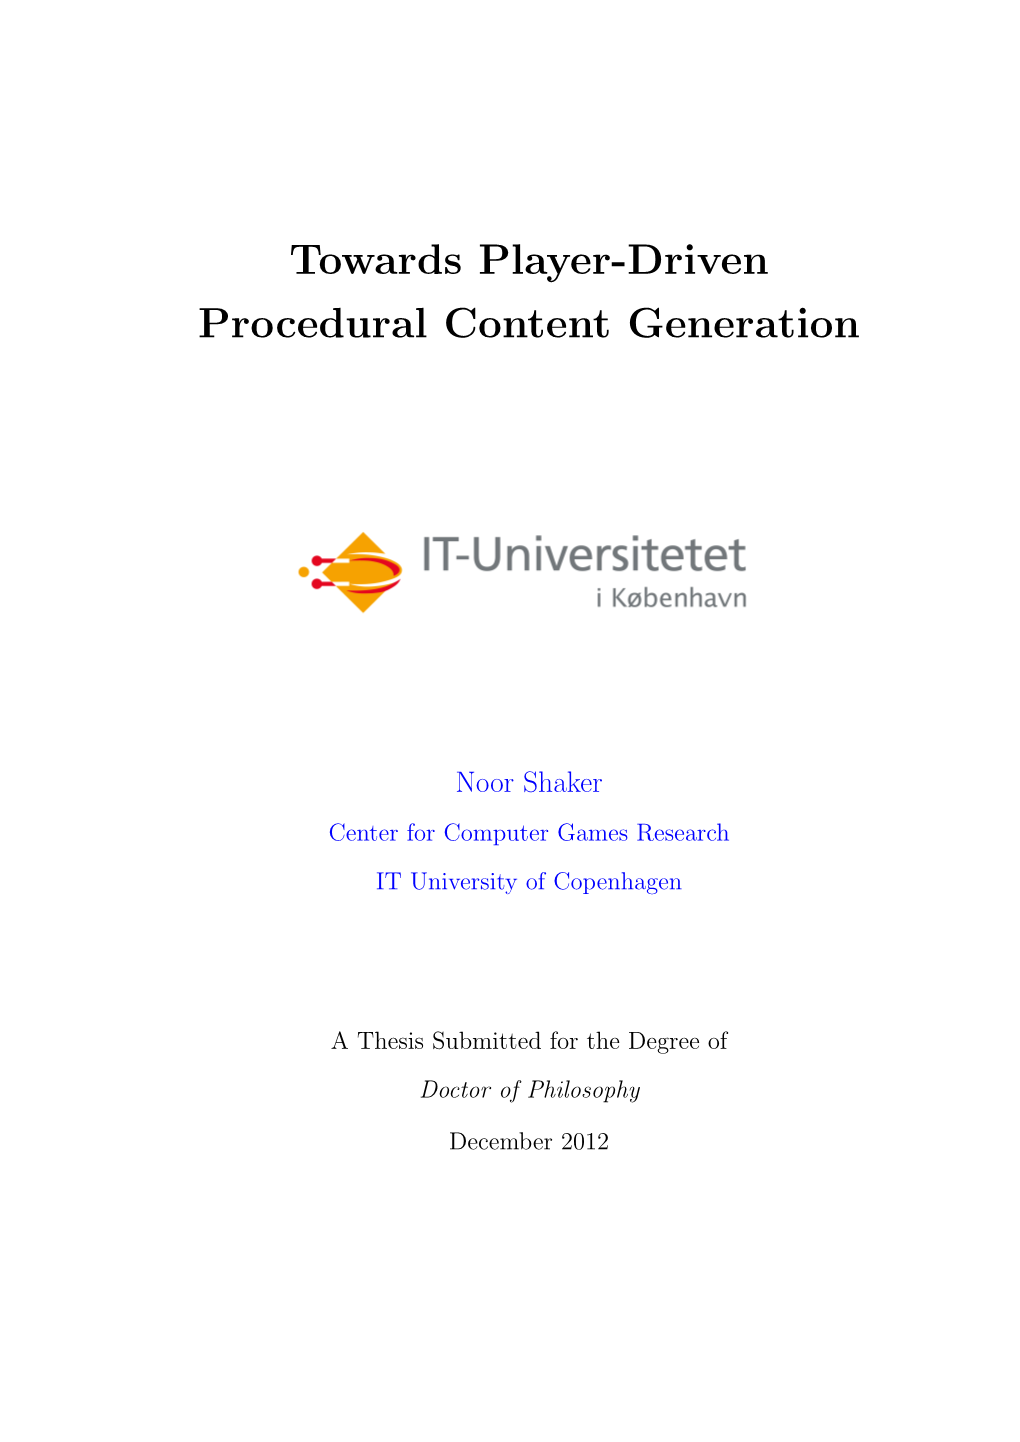 Towards Player-Driven Procedural Content Generation